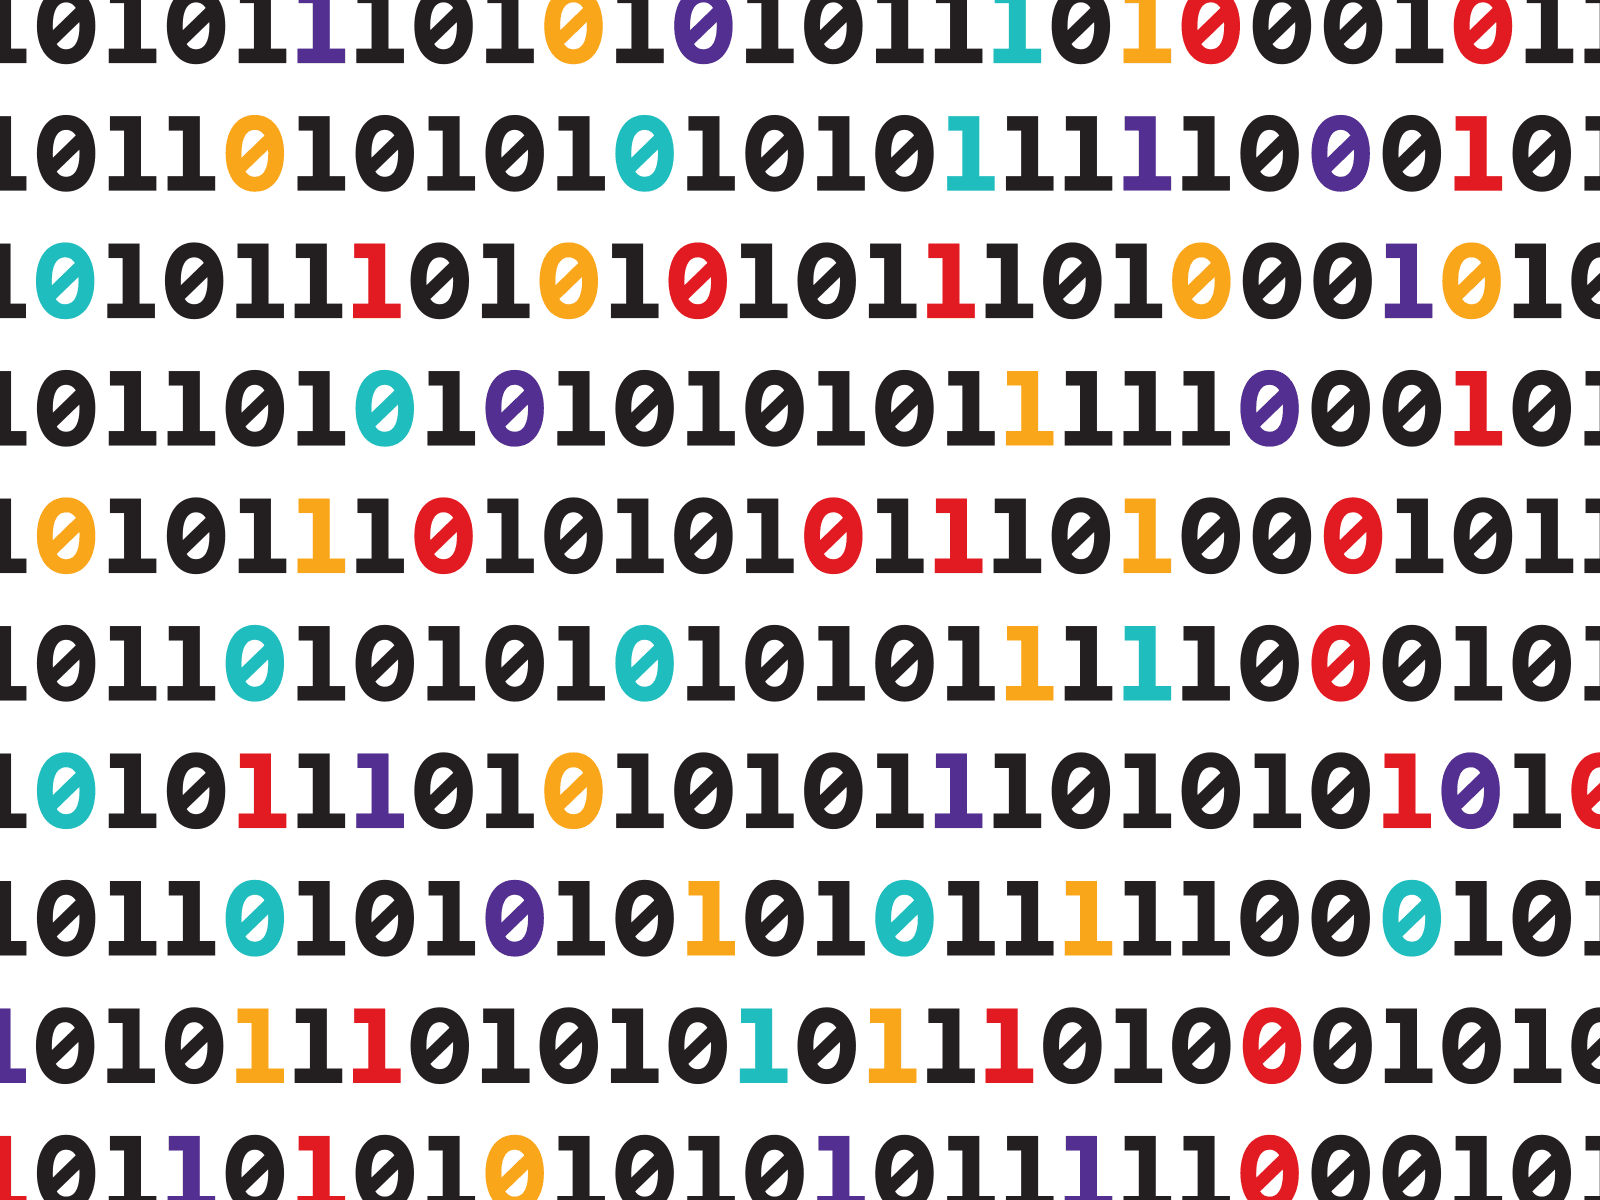 AI Culture Lab binary code visual